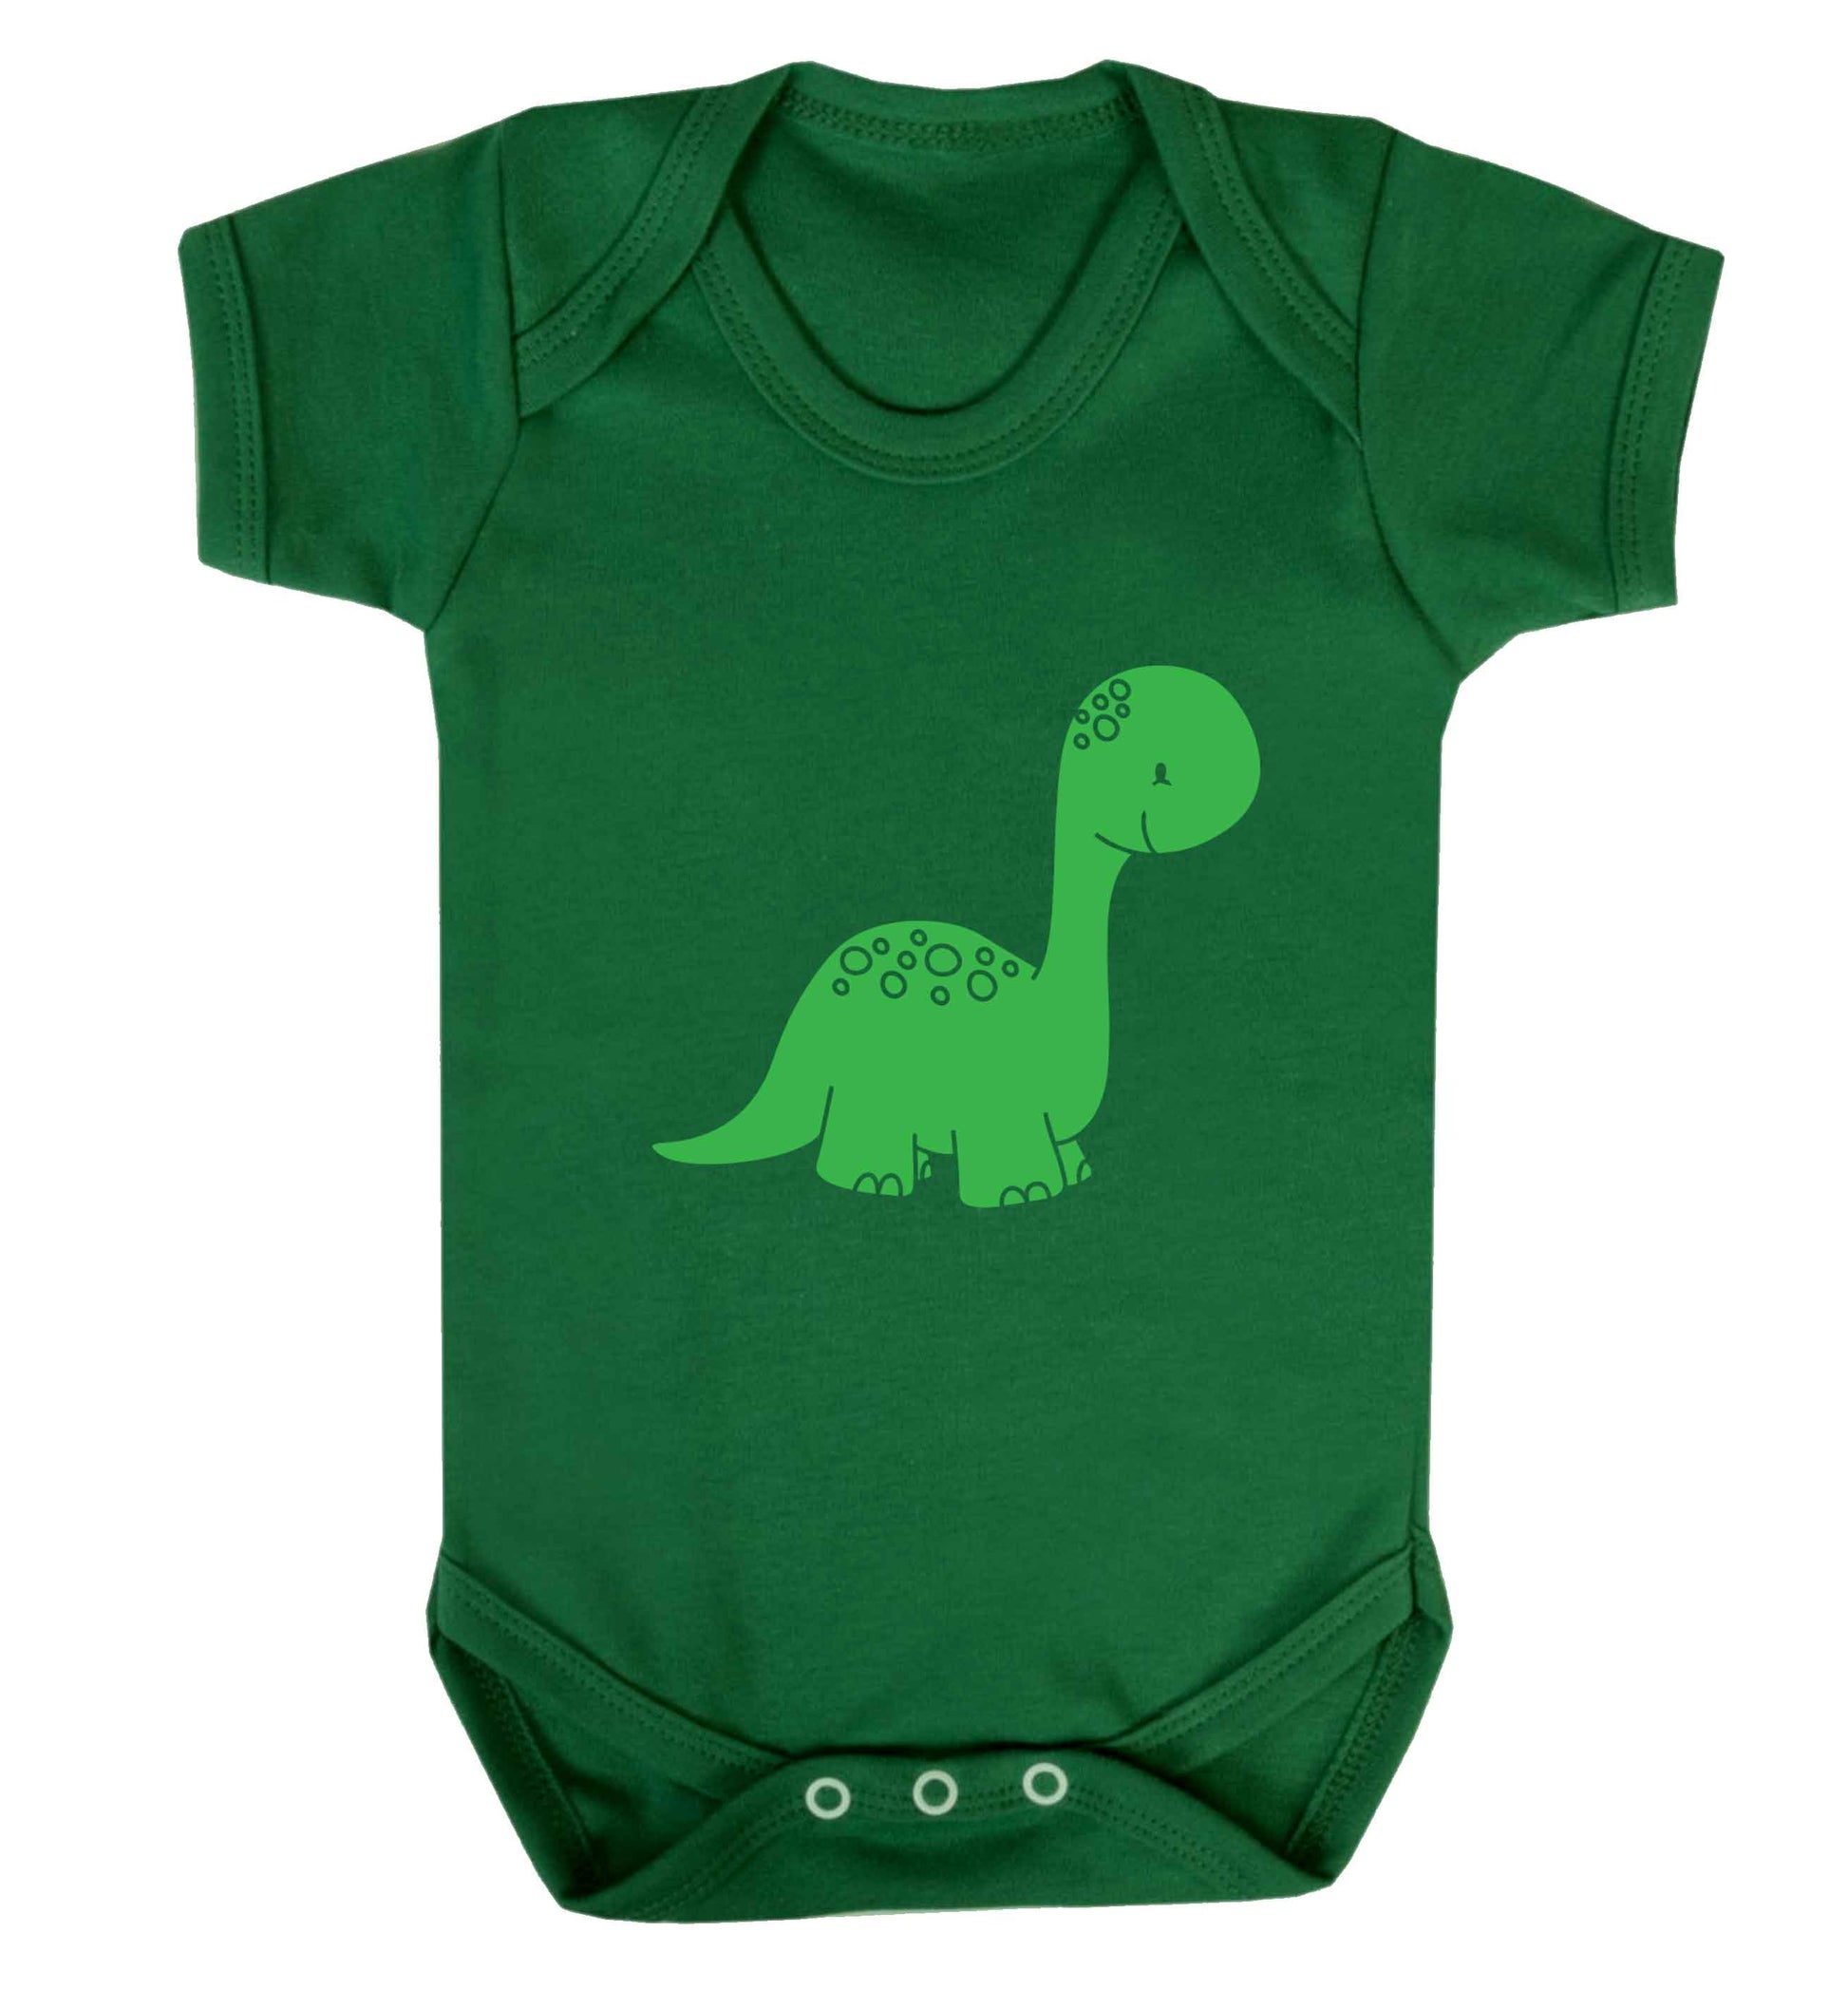 Dinosaur illustration baby vest green 18-24 months